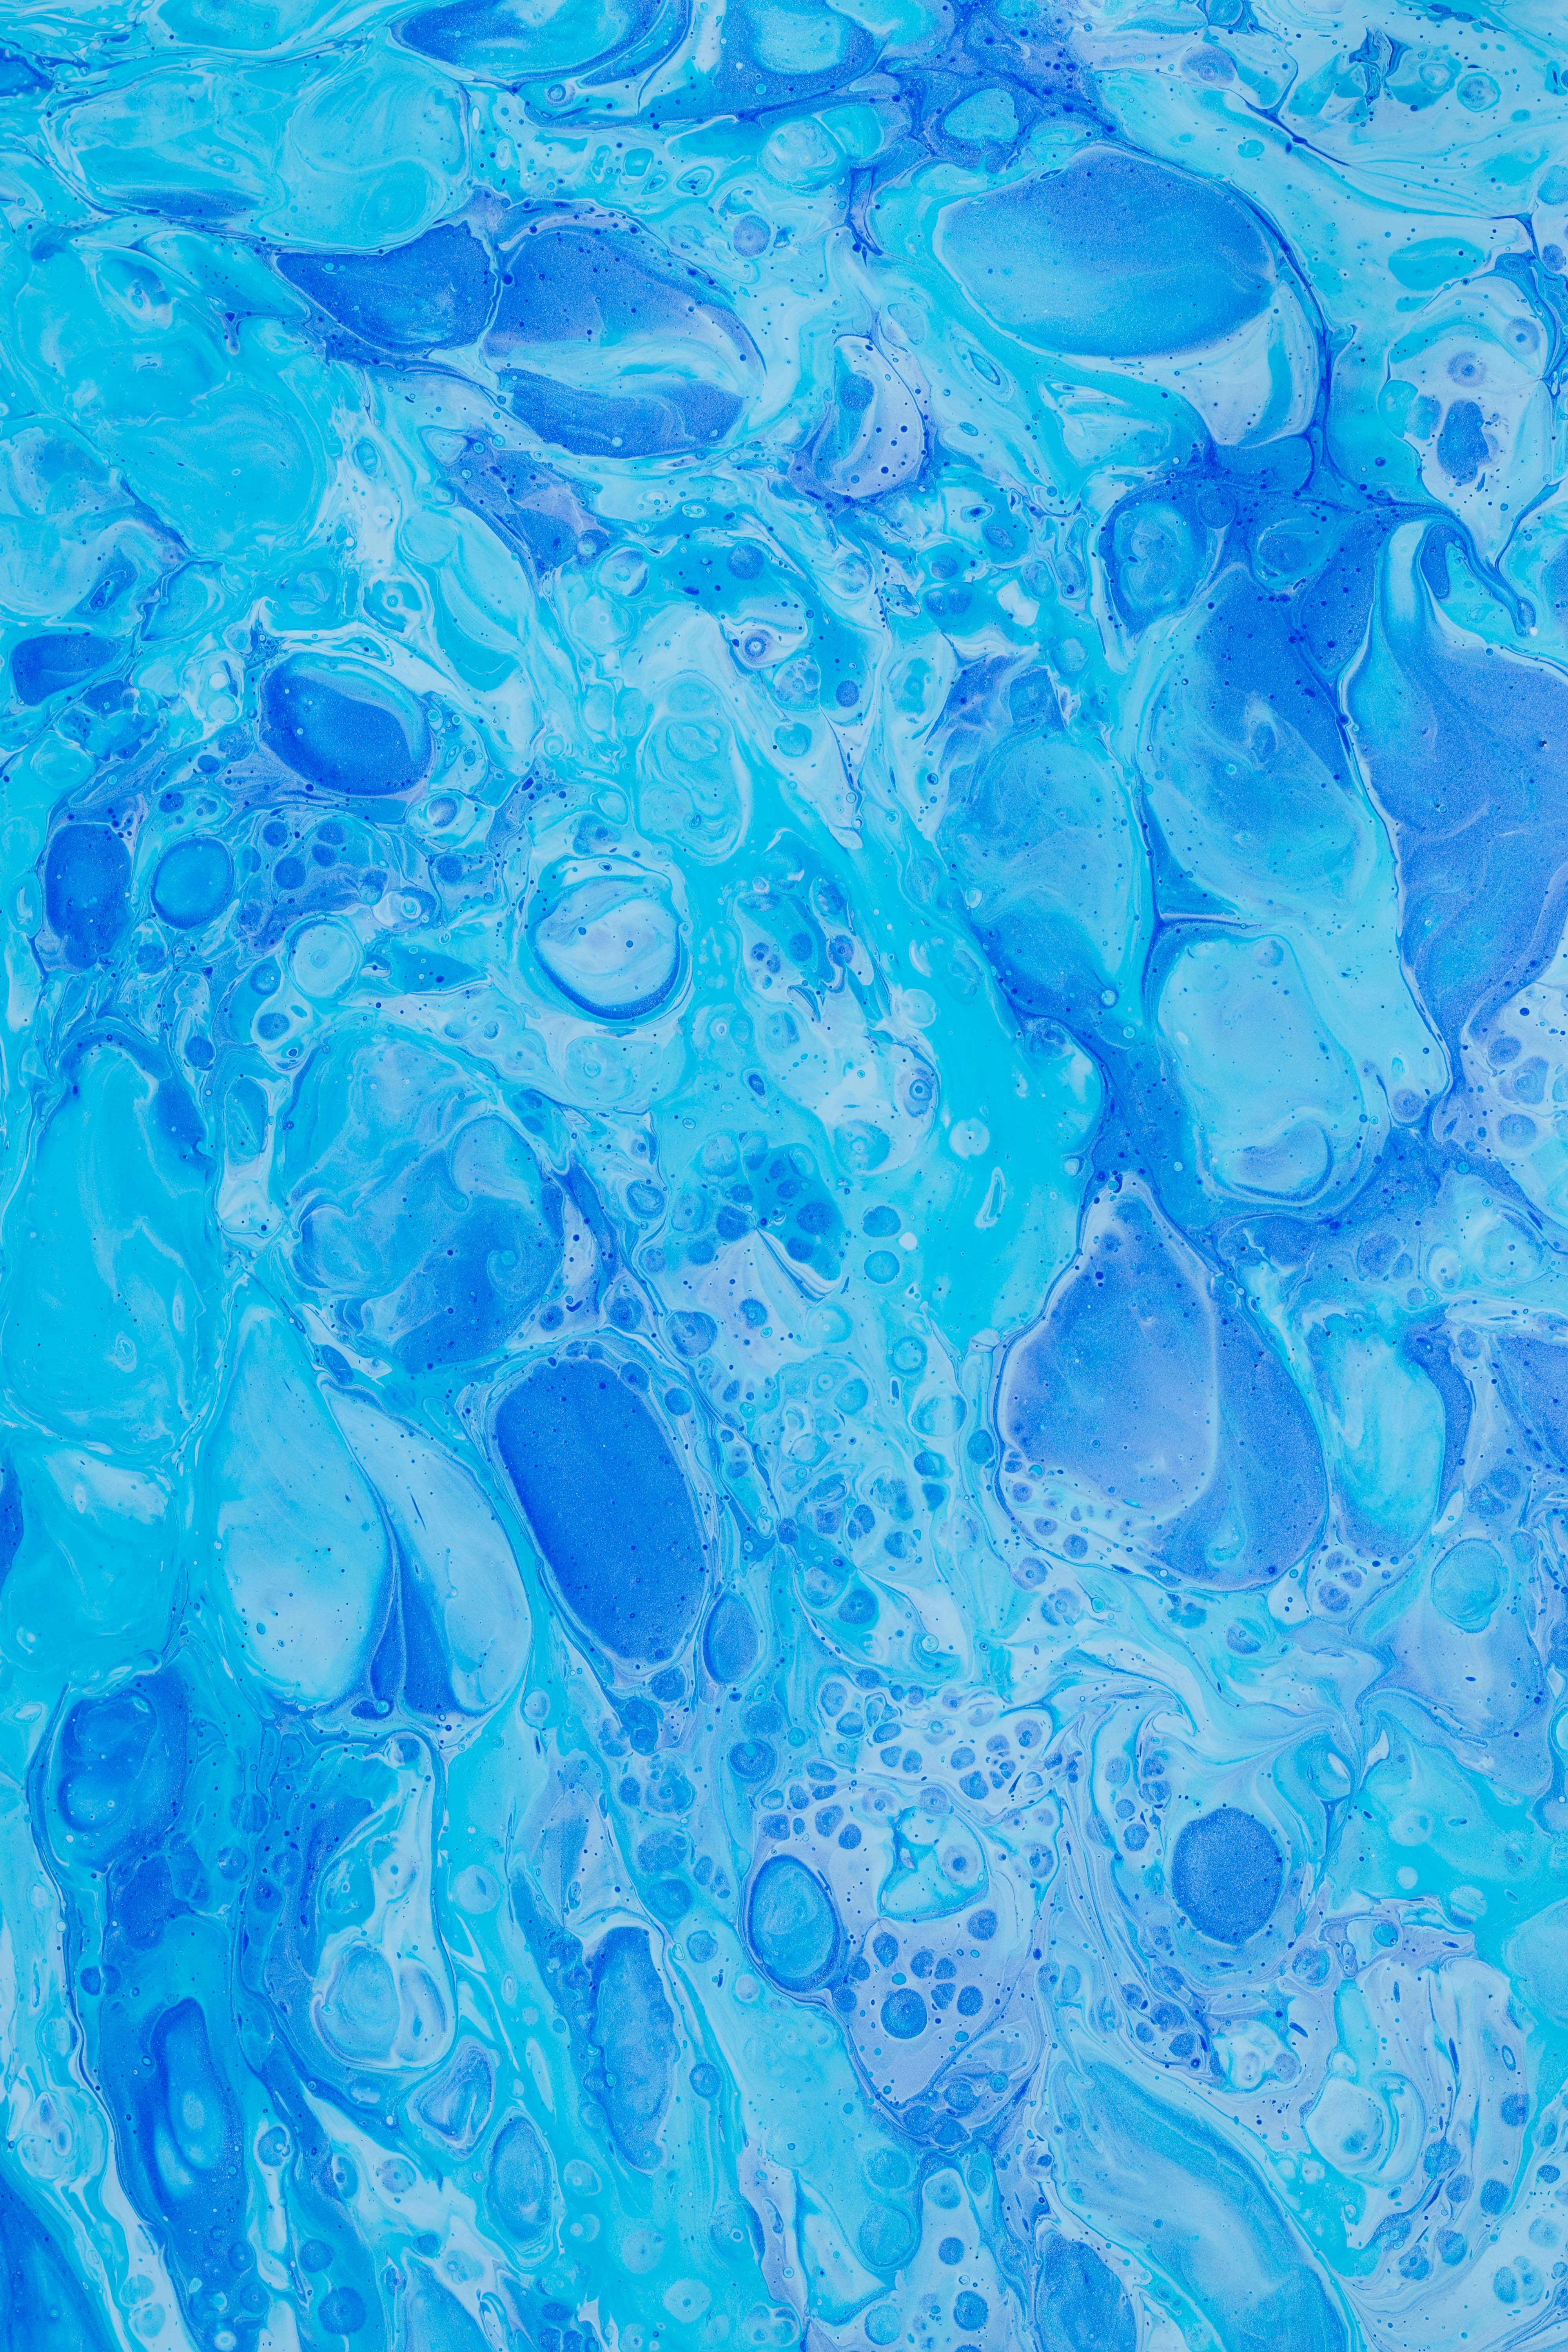 watercolor, blue, stains, spots Paint Cellphone FHD pic